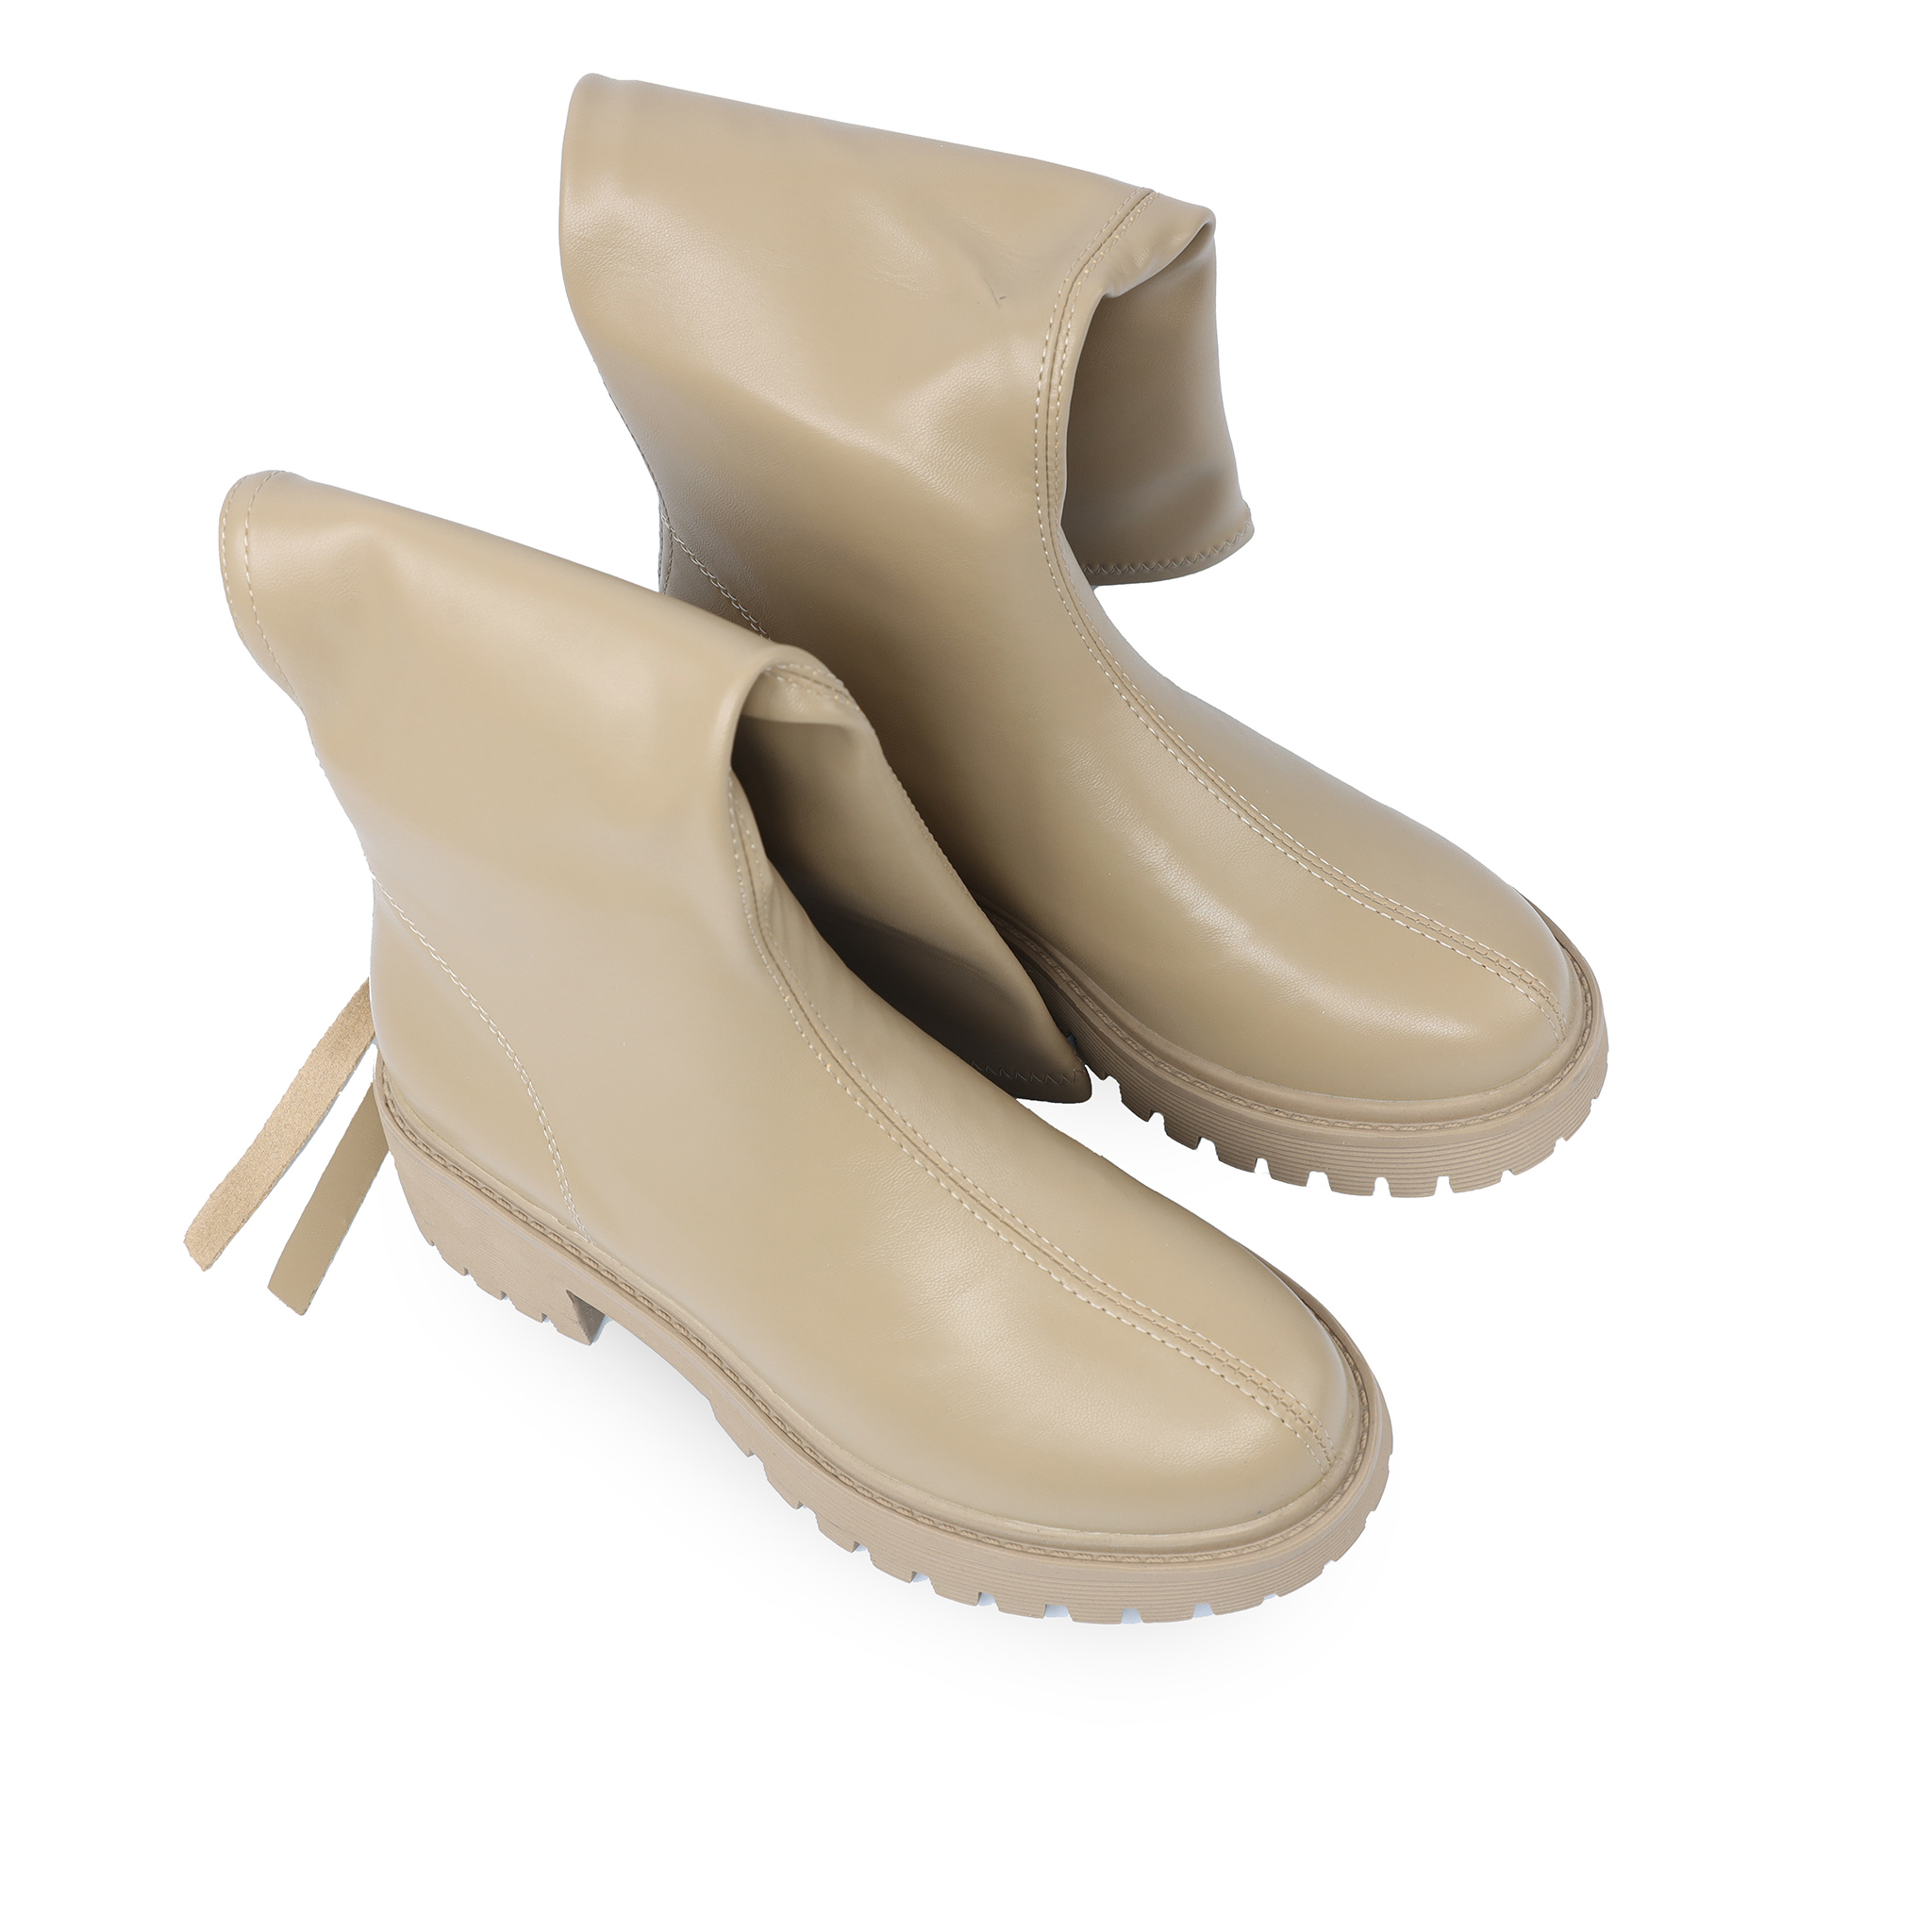 Giày Boots Nữ Da Mềm VEGAN 881-1 - Cỡ 36 - 23.0cm - Be Microfiber